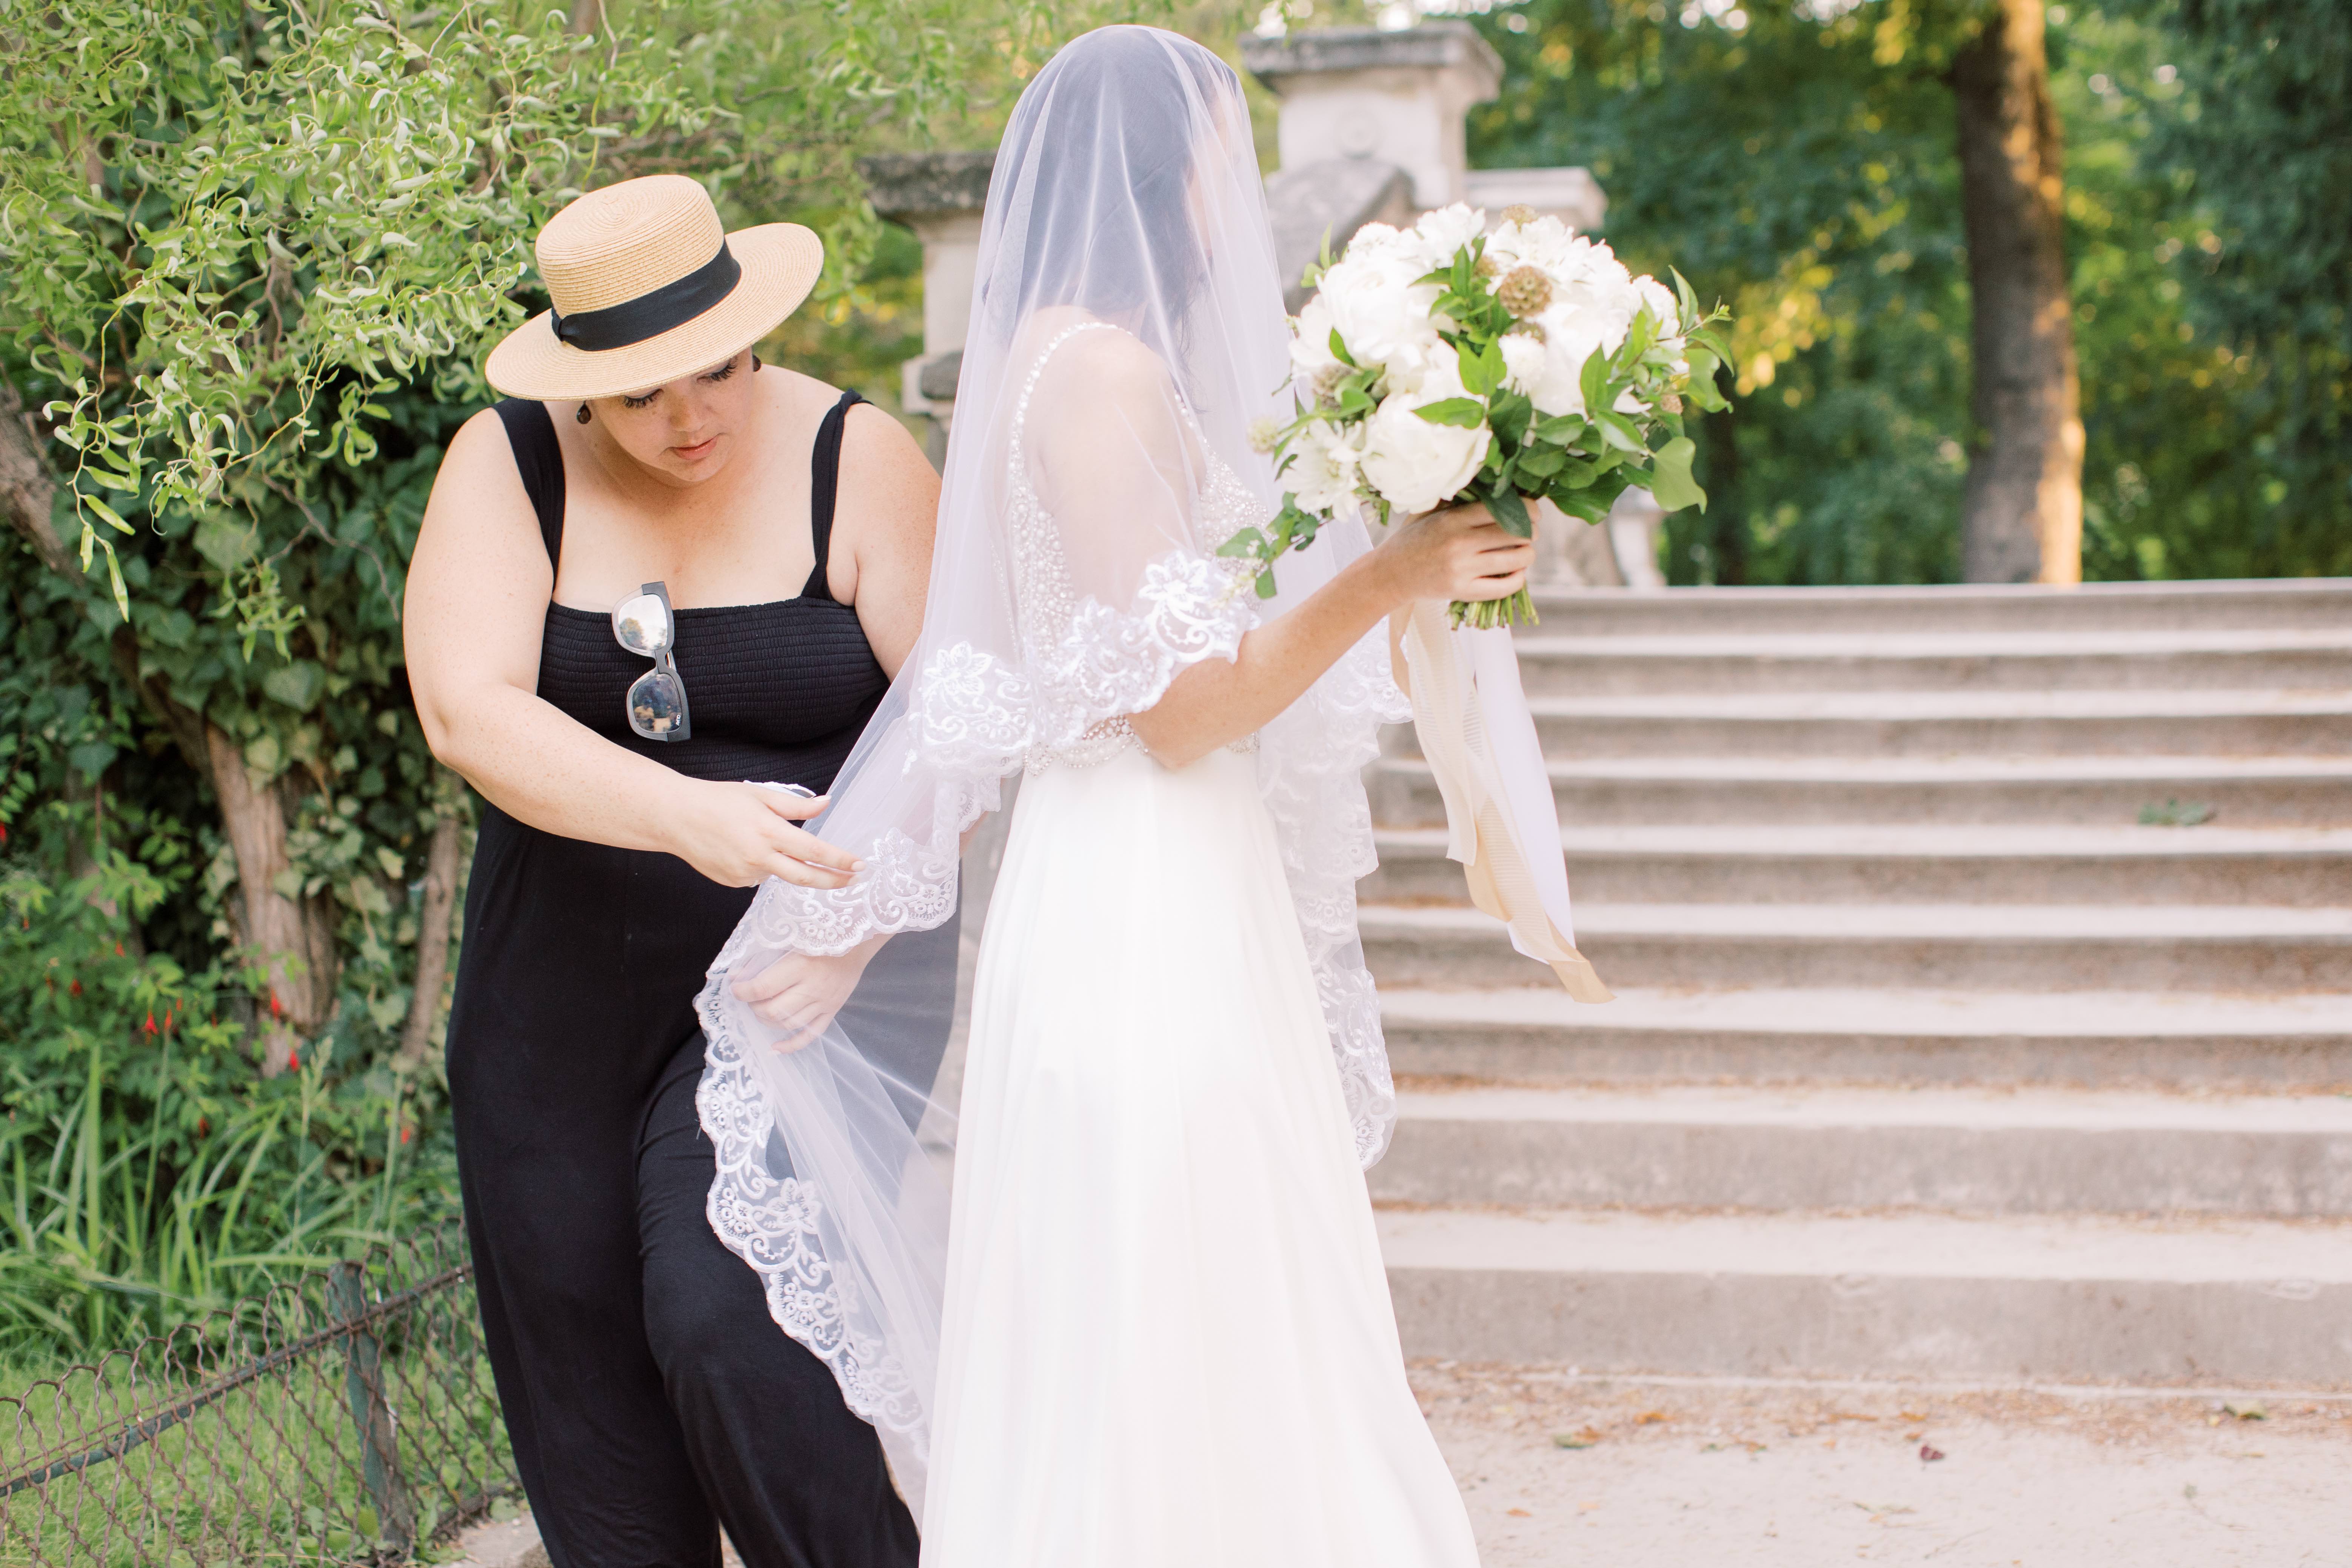 head Arizona wedding planner Ashley from your jubilee helping adjust a brides veil in Paris